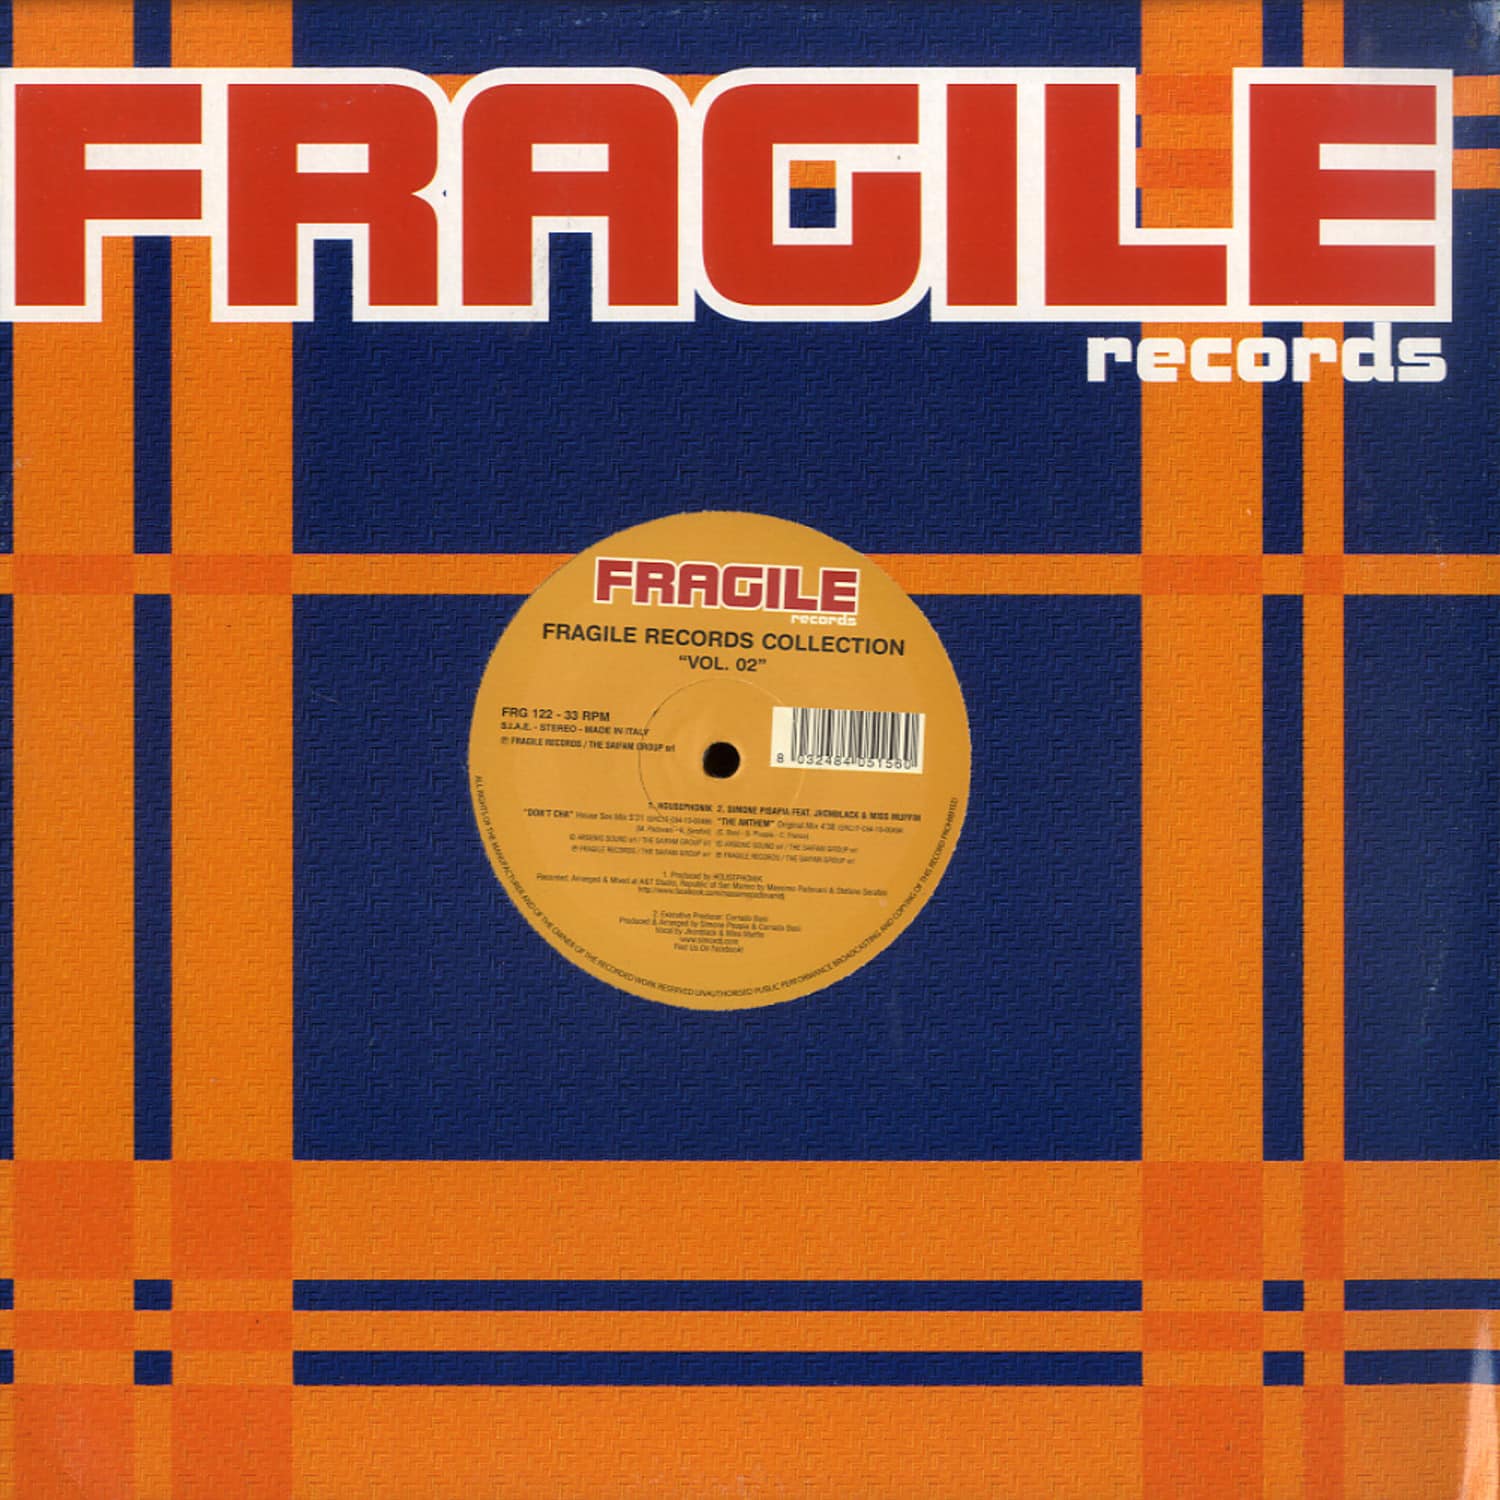 Fragile Records Collection - VOL. 2